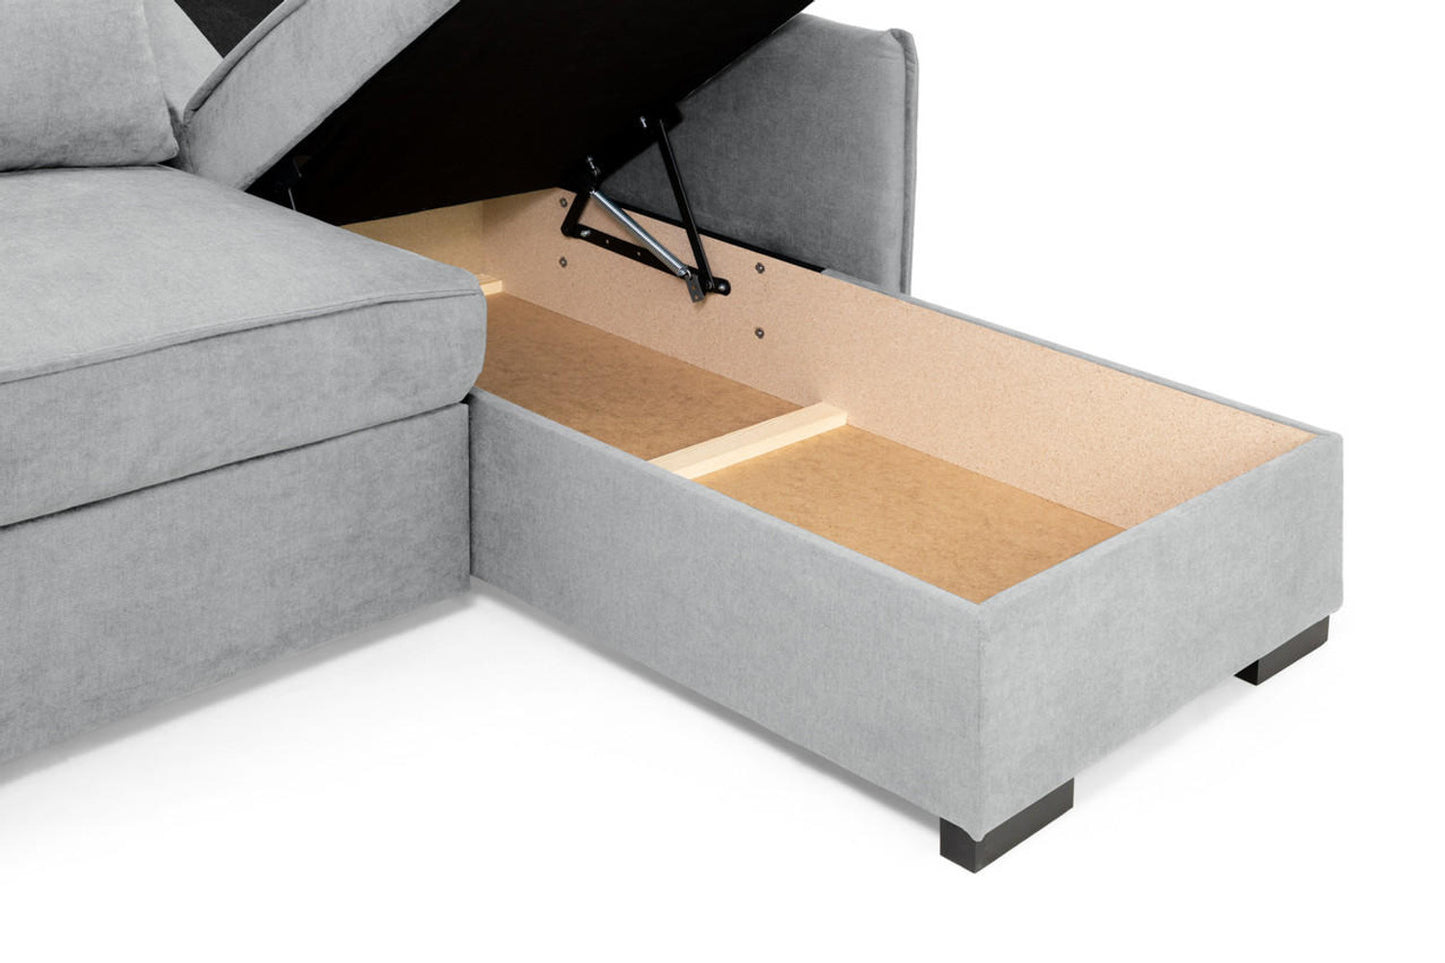 Miel Sofa Bed With Storage - Universal Corner - Grey